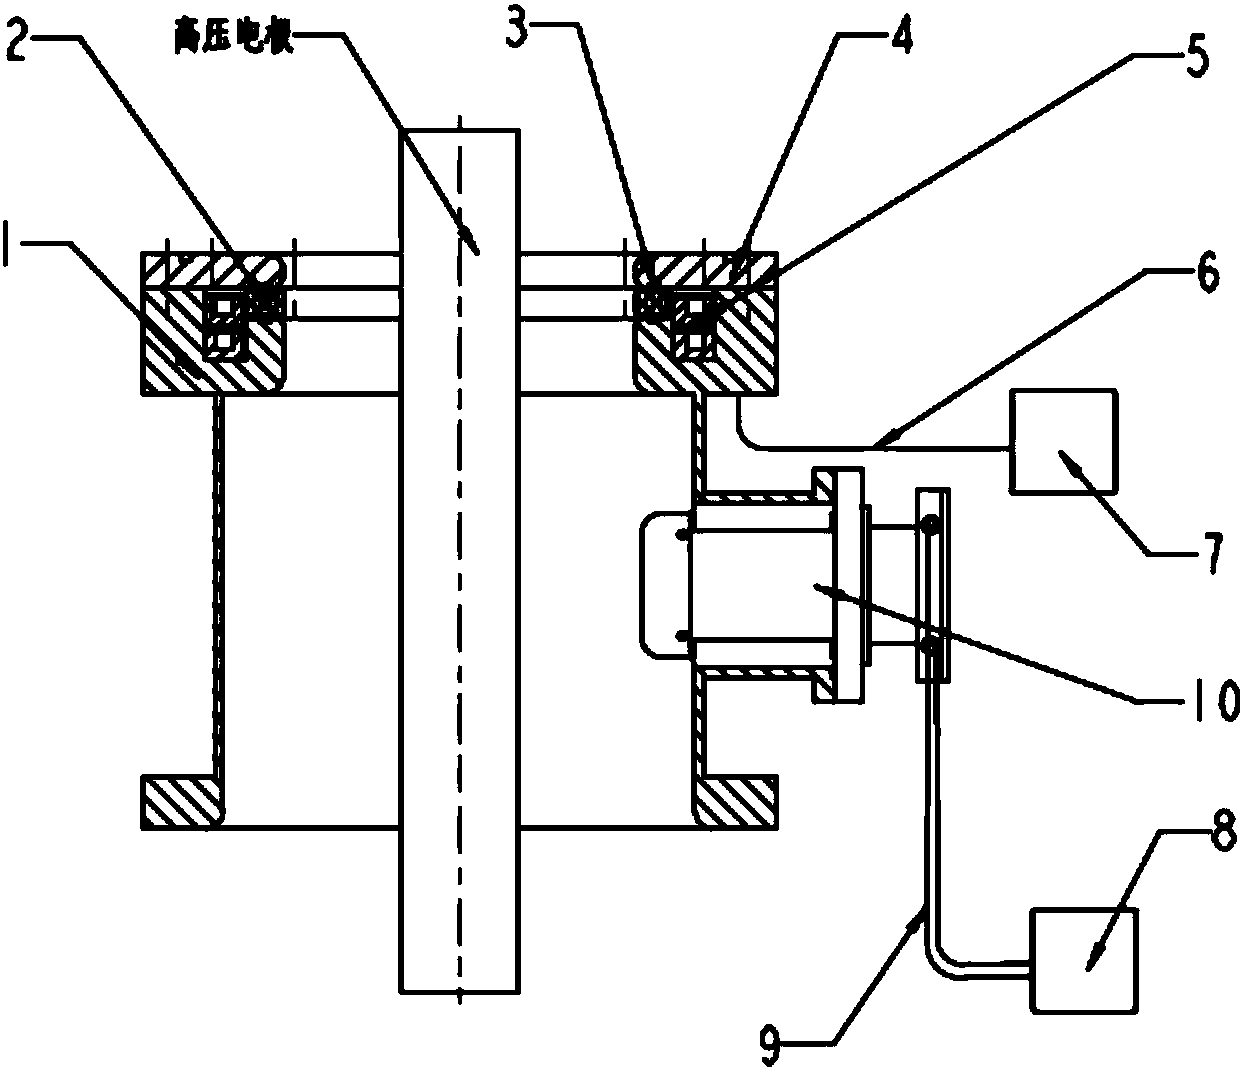 Combined optical transformer for novel GIS